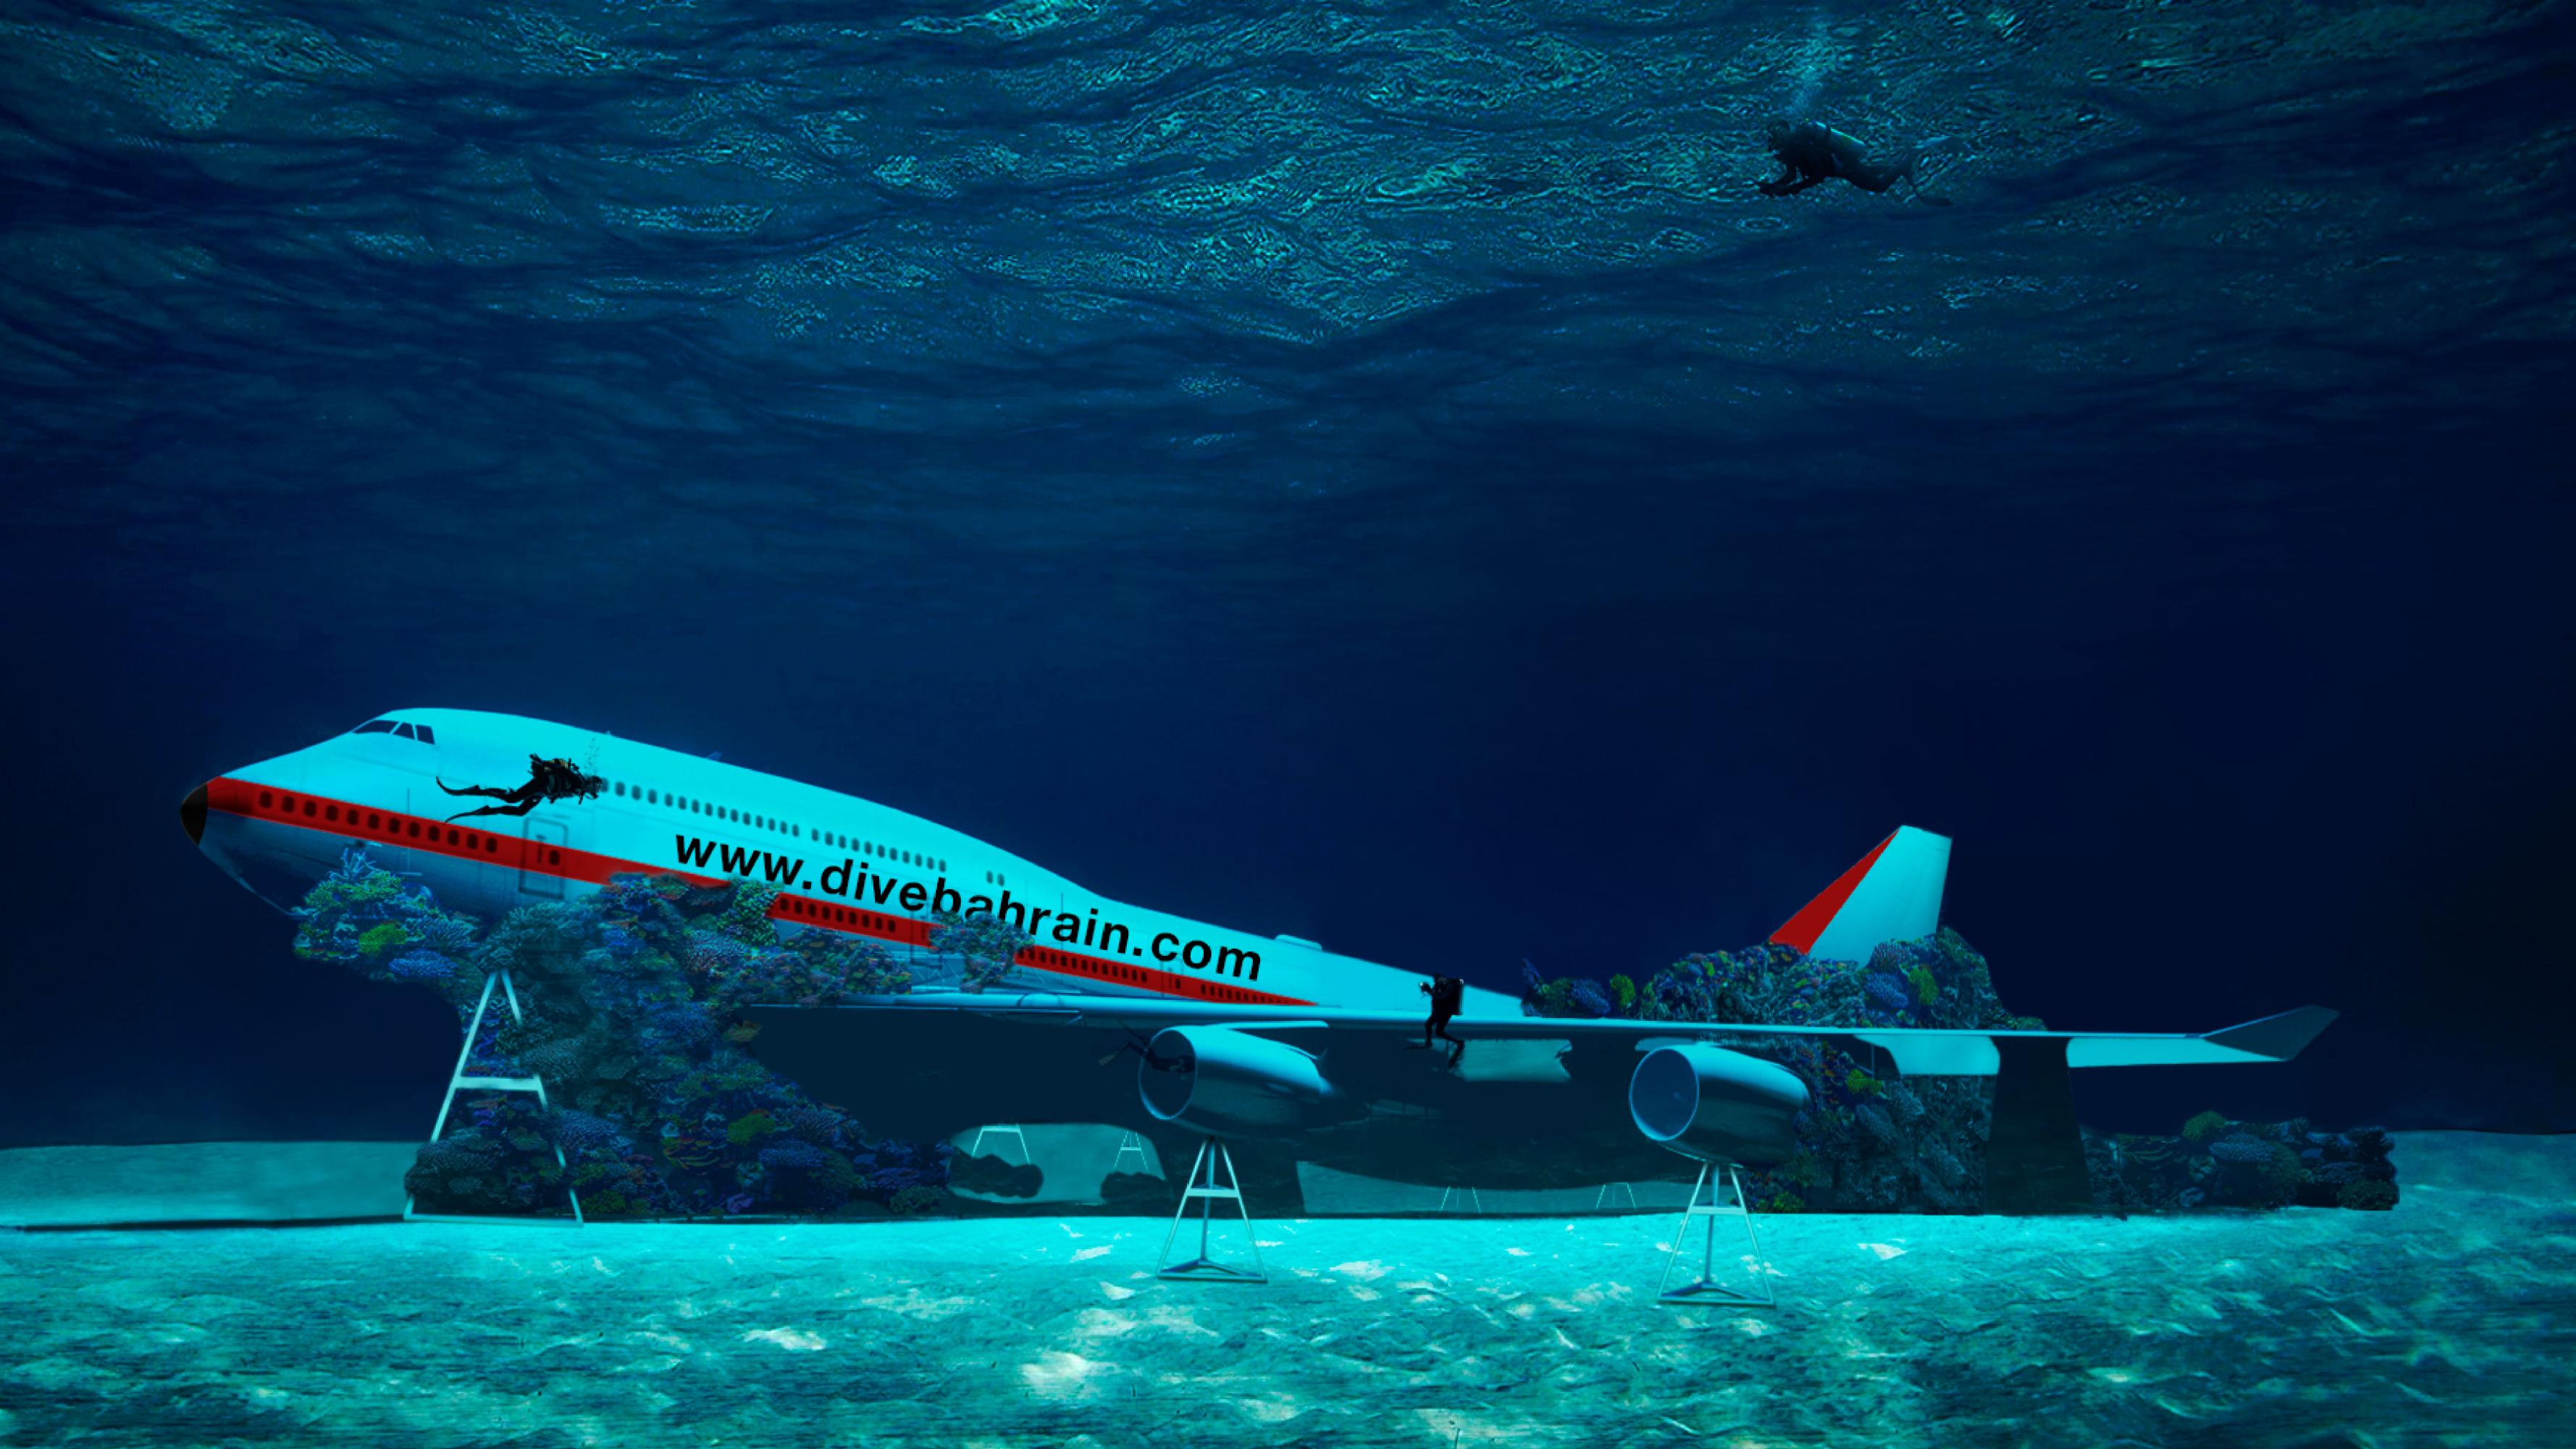 In Bahrain sink Boeing 747 will become adventure of underwater amusement park